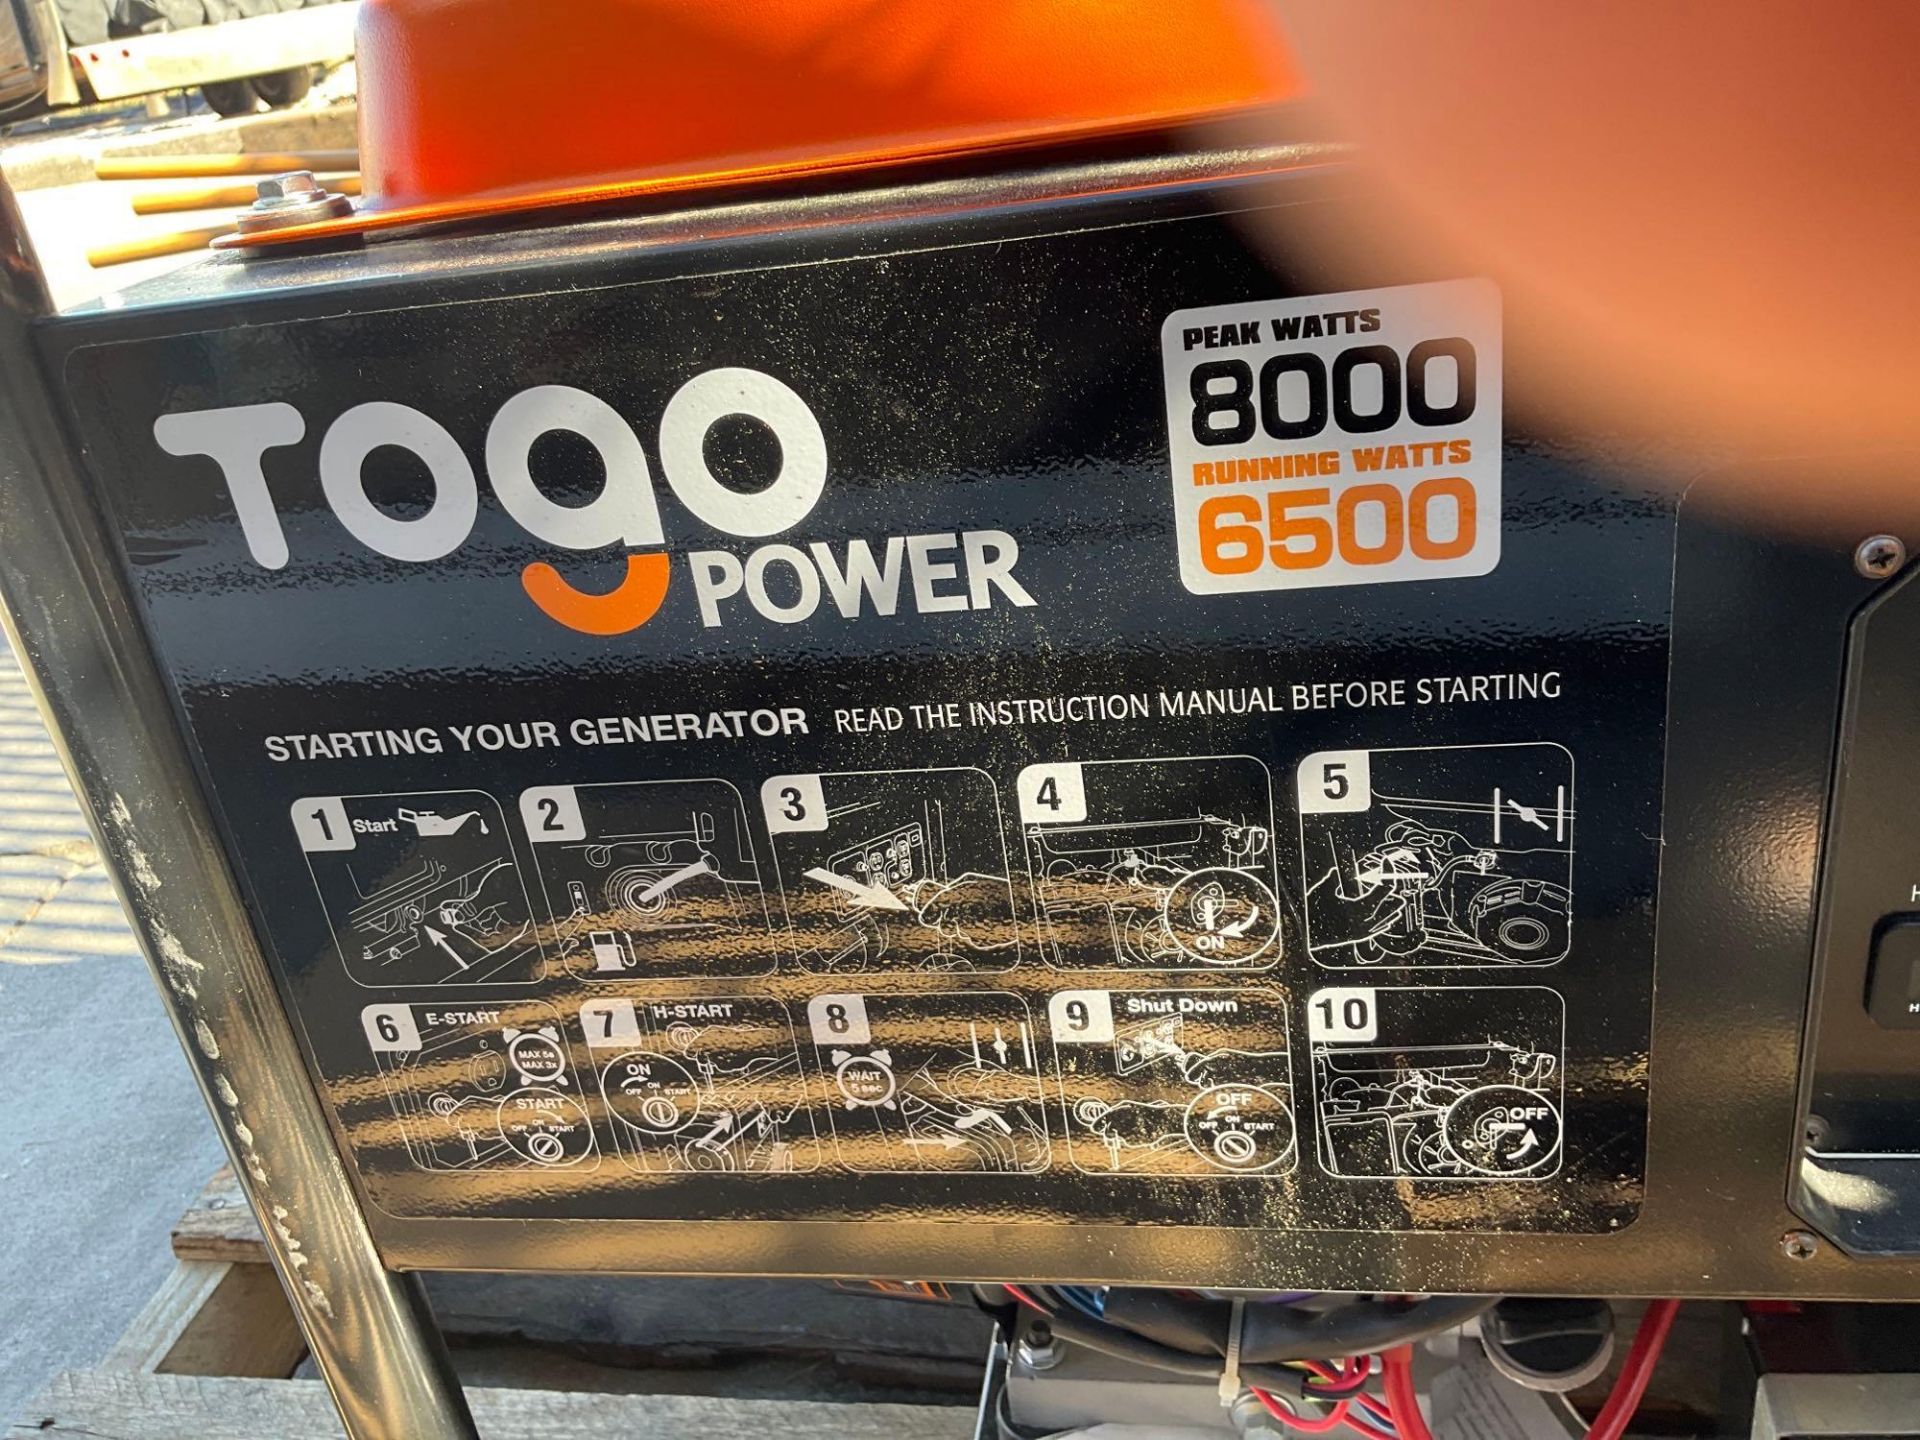 UNUSED TOGO POWER GAS GENERATOR MODEL GG8000; 4-STROKE, 8000 PEAK WATTS, 6500 RUNNING WATTS - Image 6 of 7